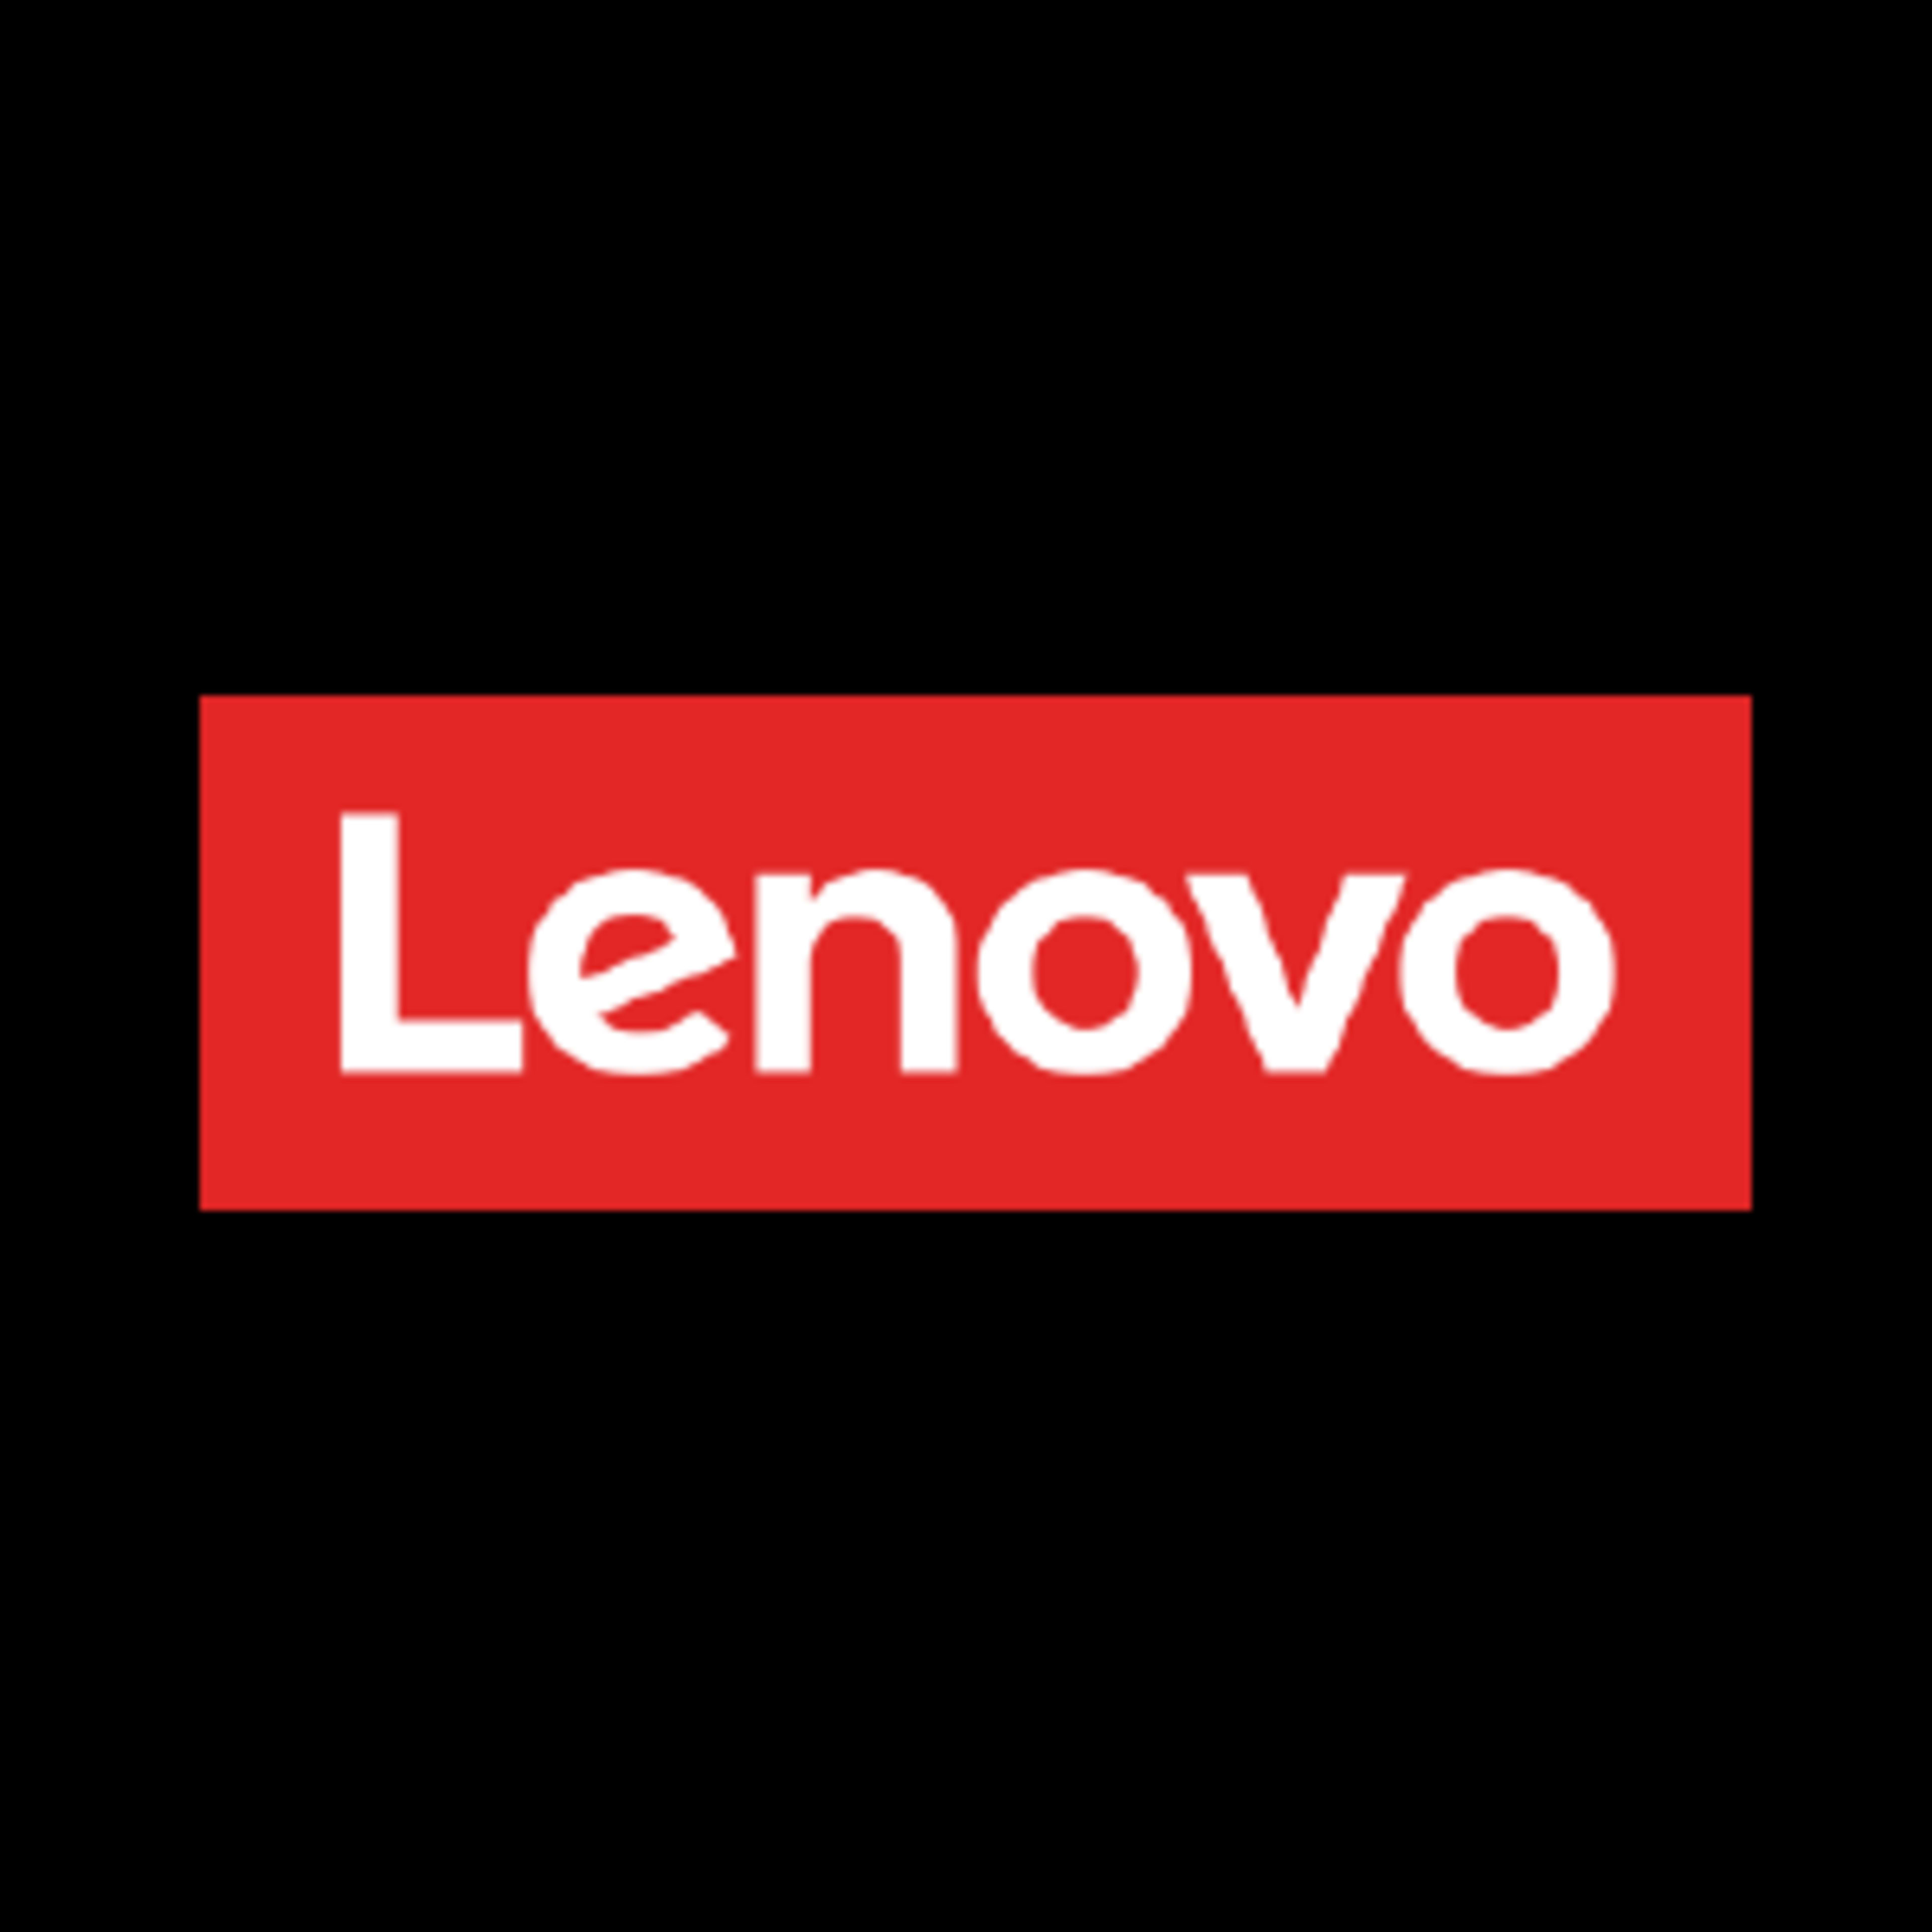 Lenovo Ireland Code